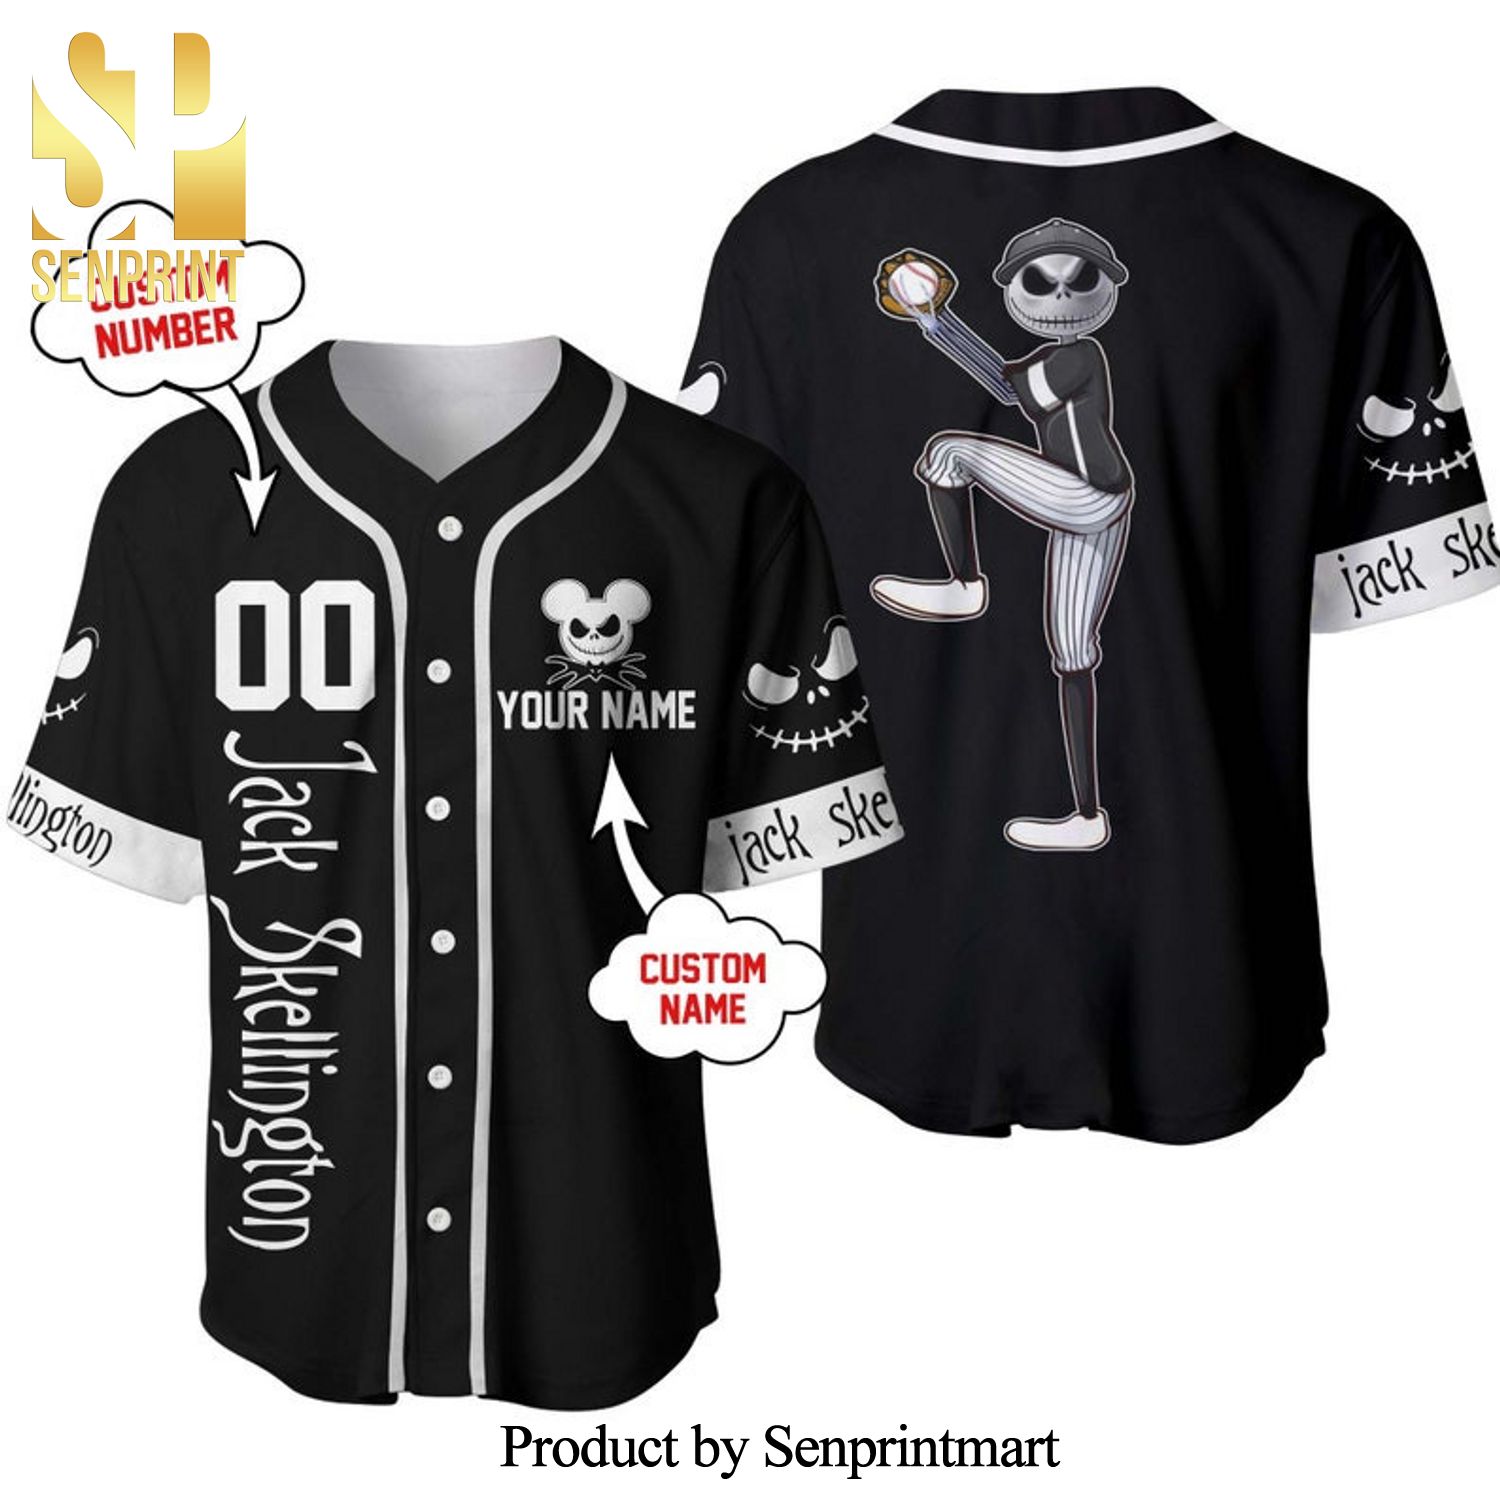 Personalized Jack Skellington Disney All Over Print Baseball Jersey – Black